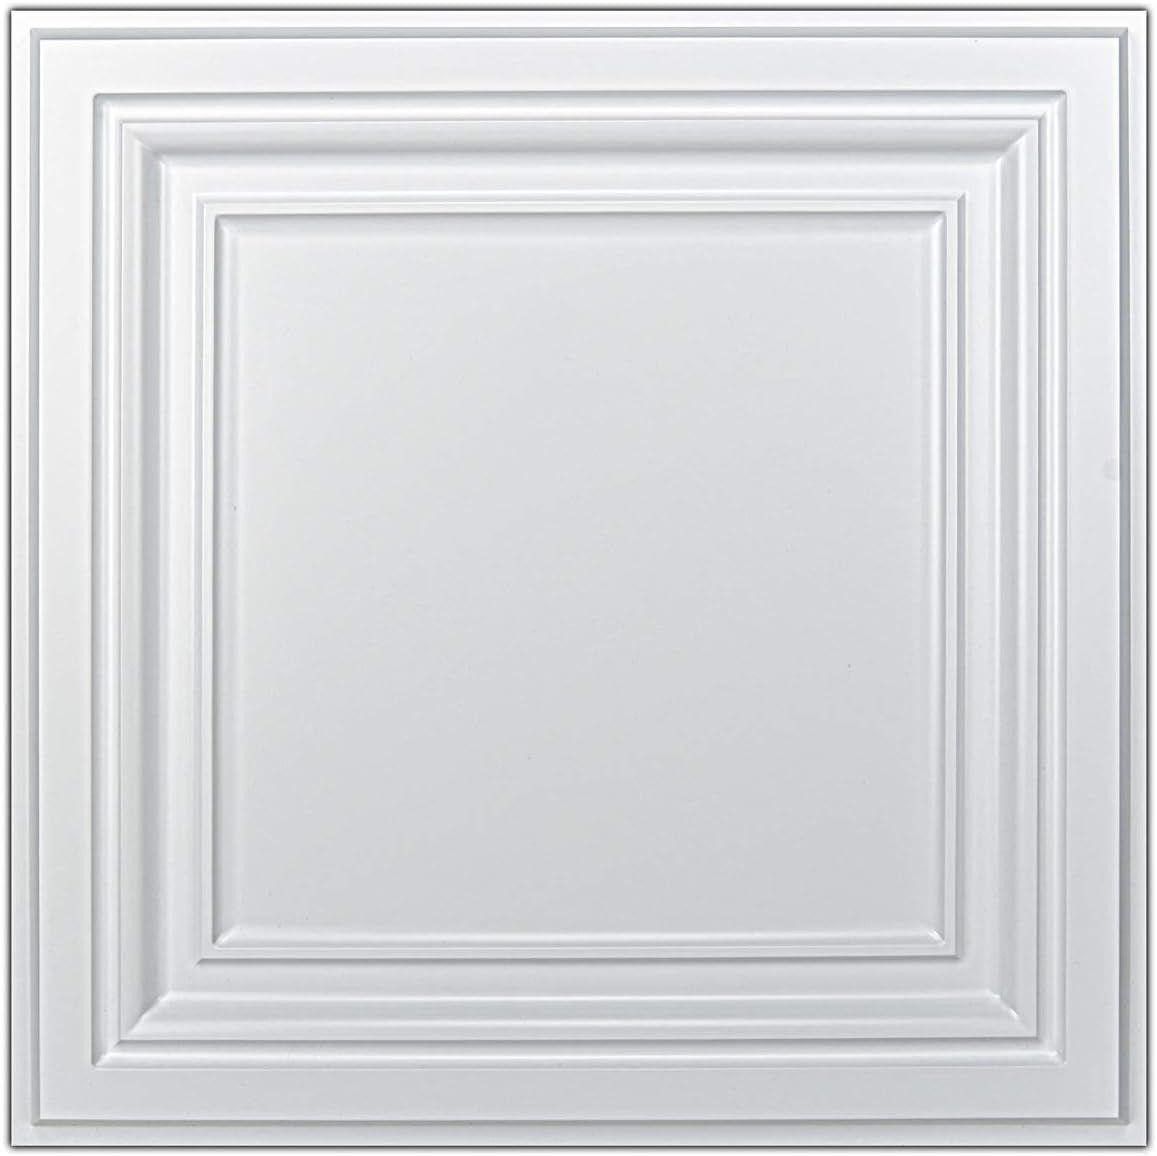 New $126 PVC Ceiling PlasticTiles White (12-Pack)